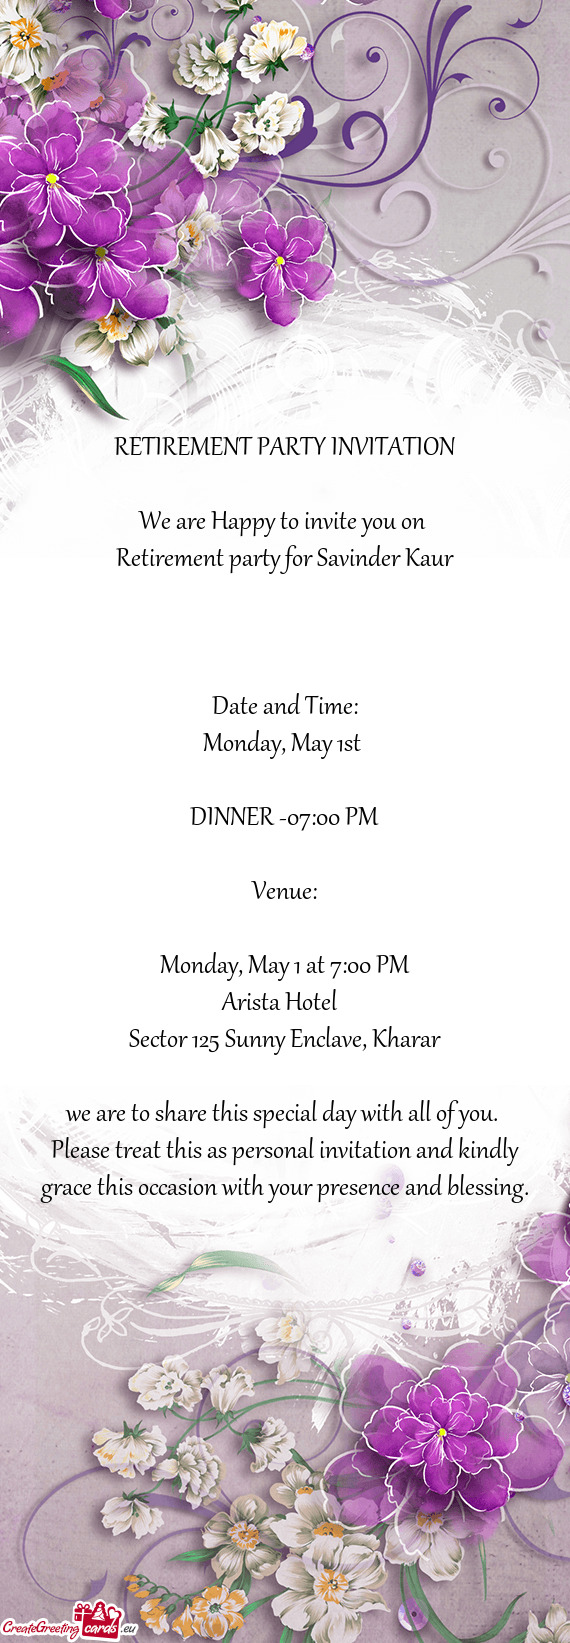 Retirement party for Savinder Kaur